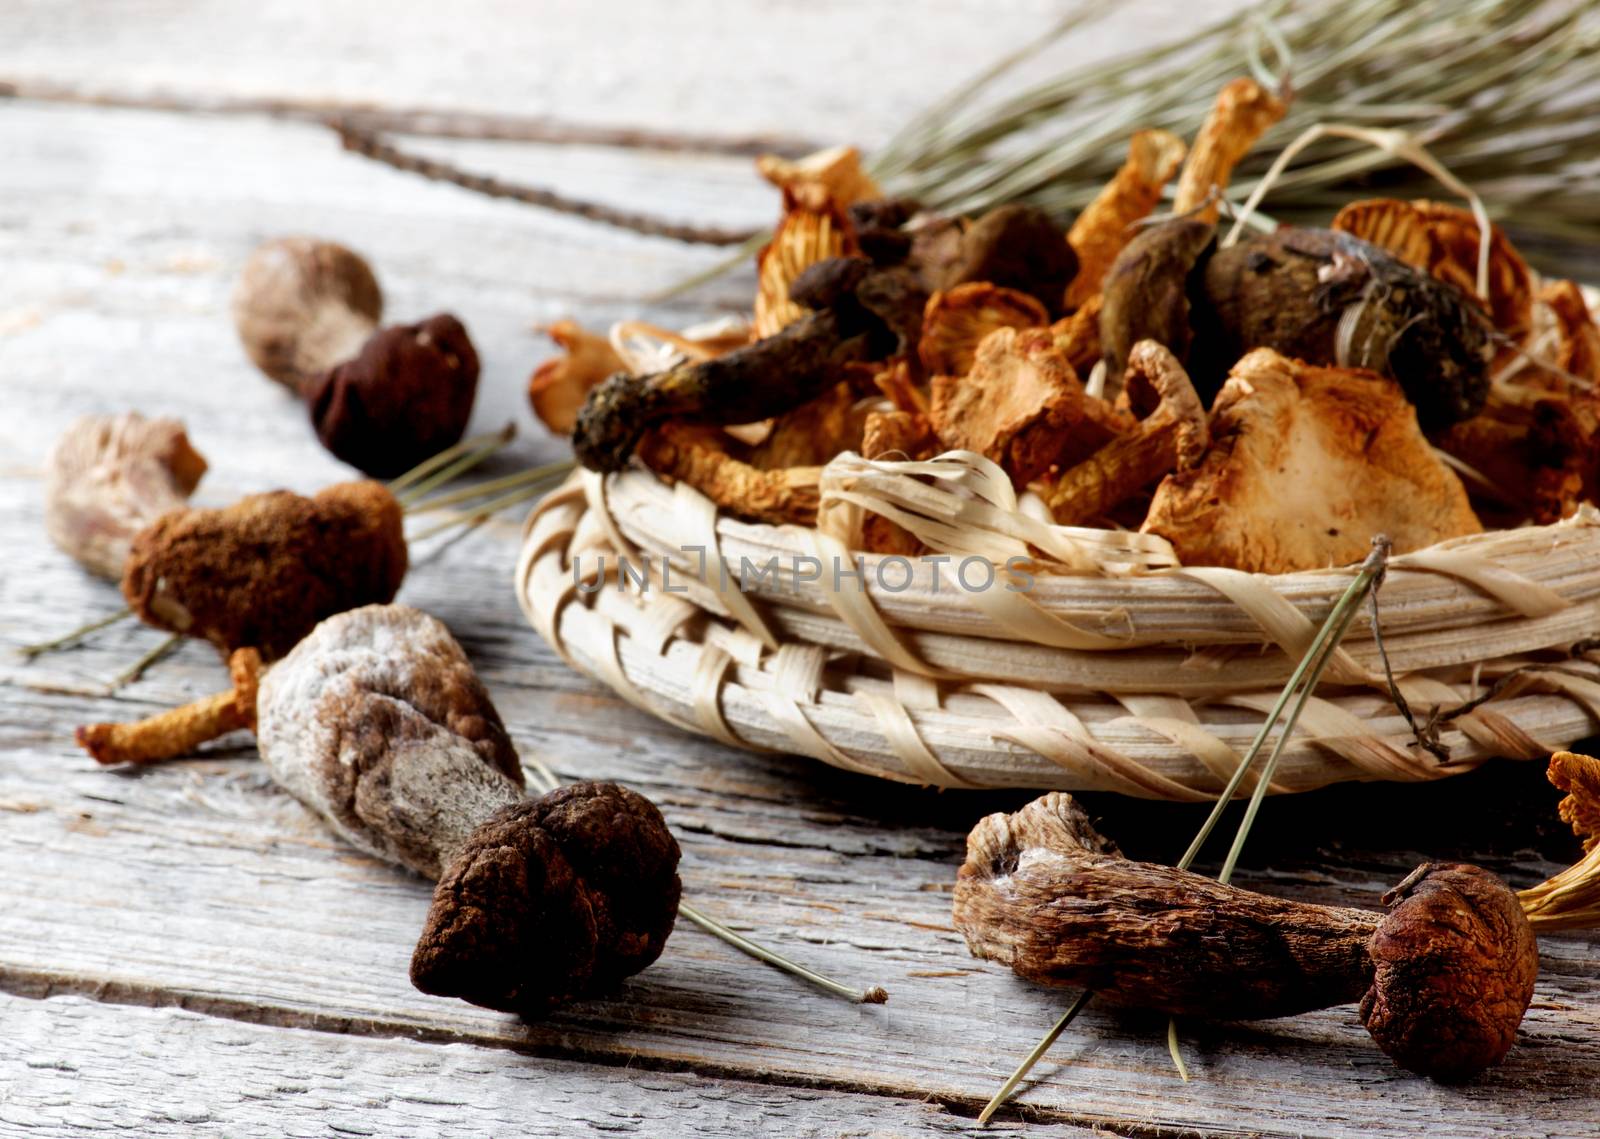 Arrangement of Dried Mushrooms by zhekos